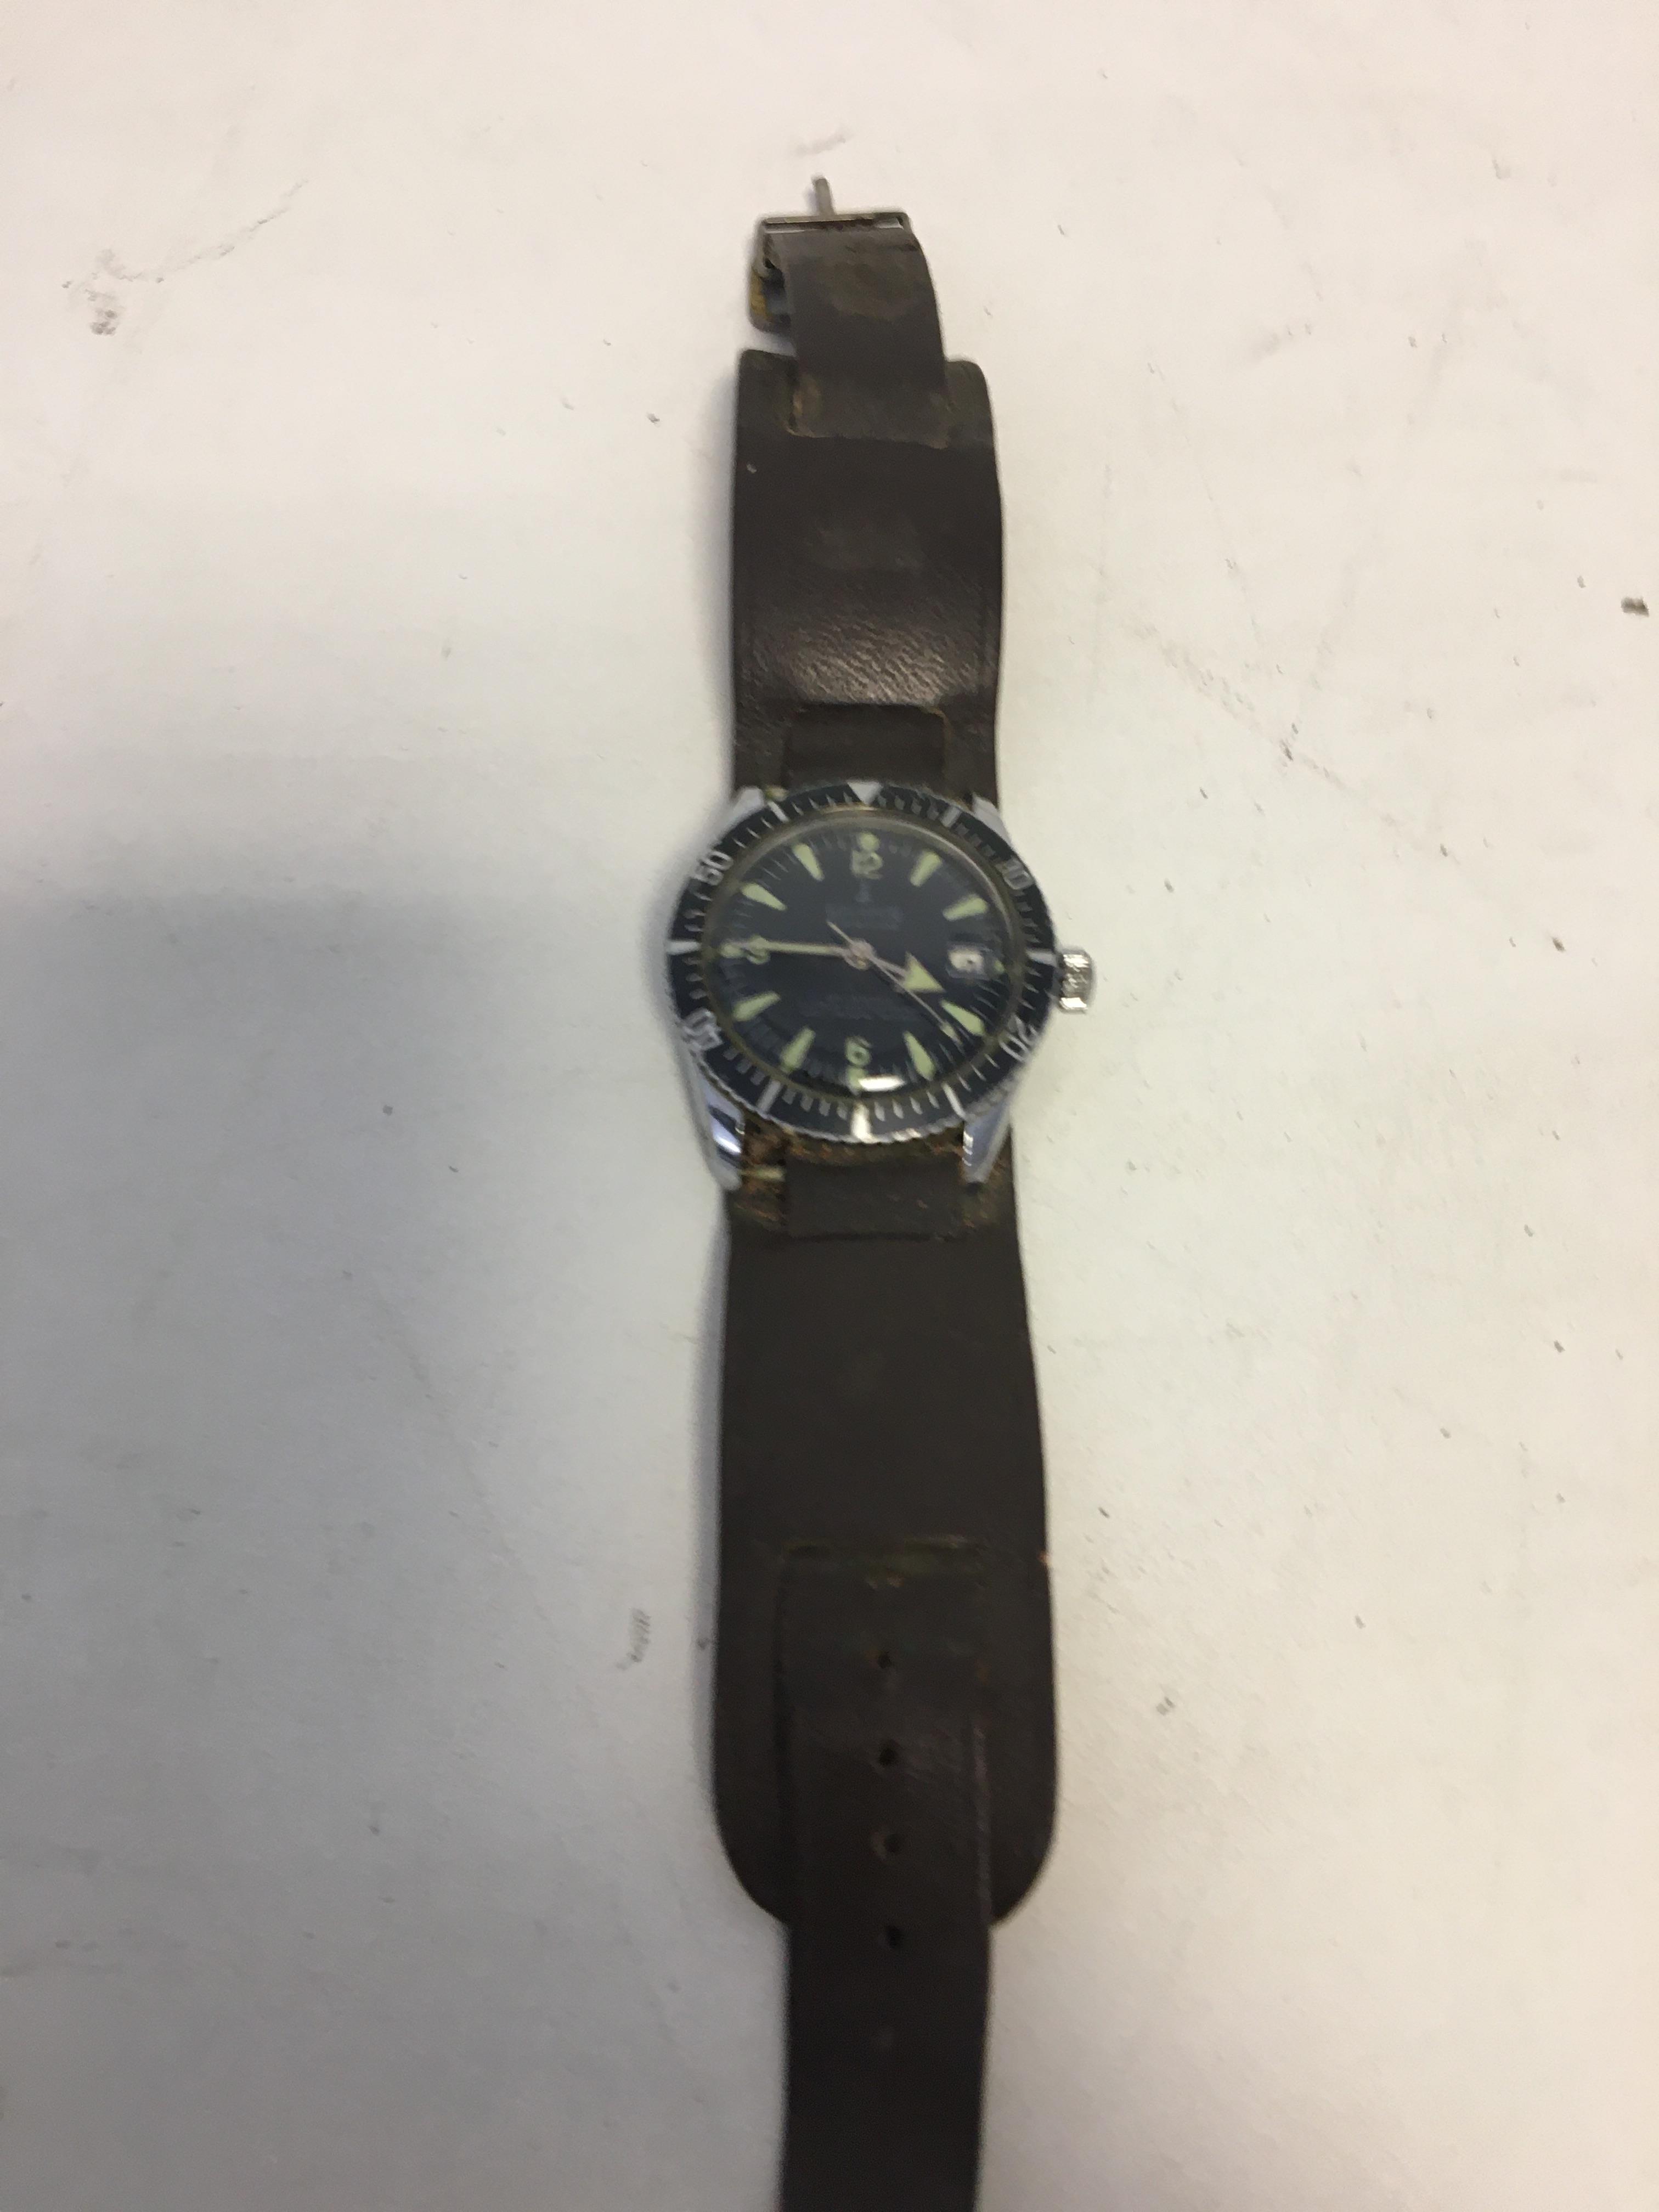 Vintage Submariner watch - Image 2 of 3